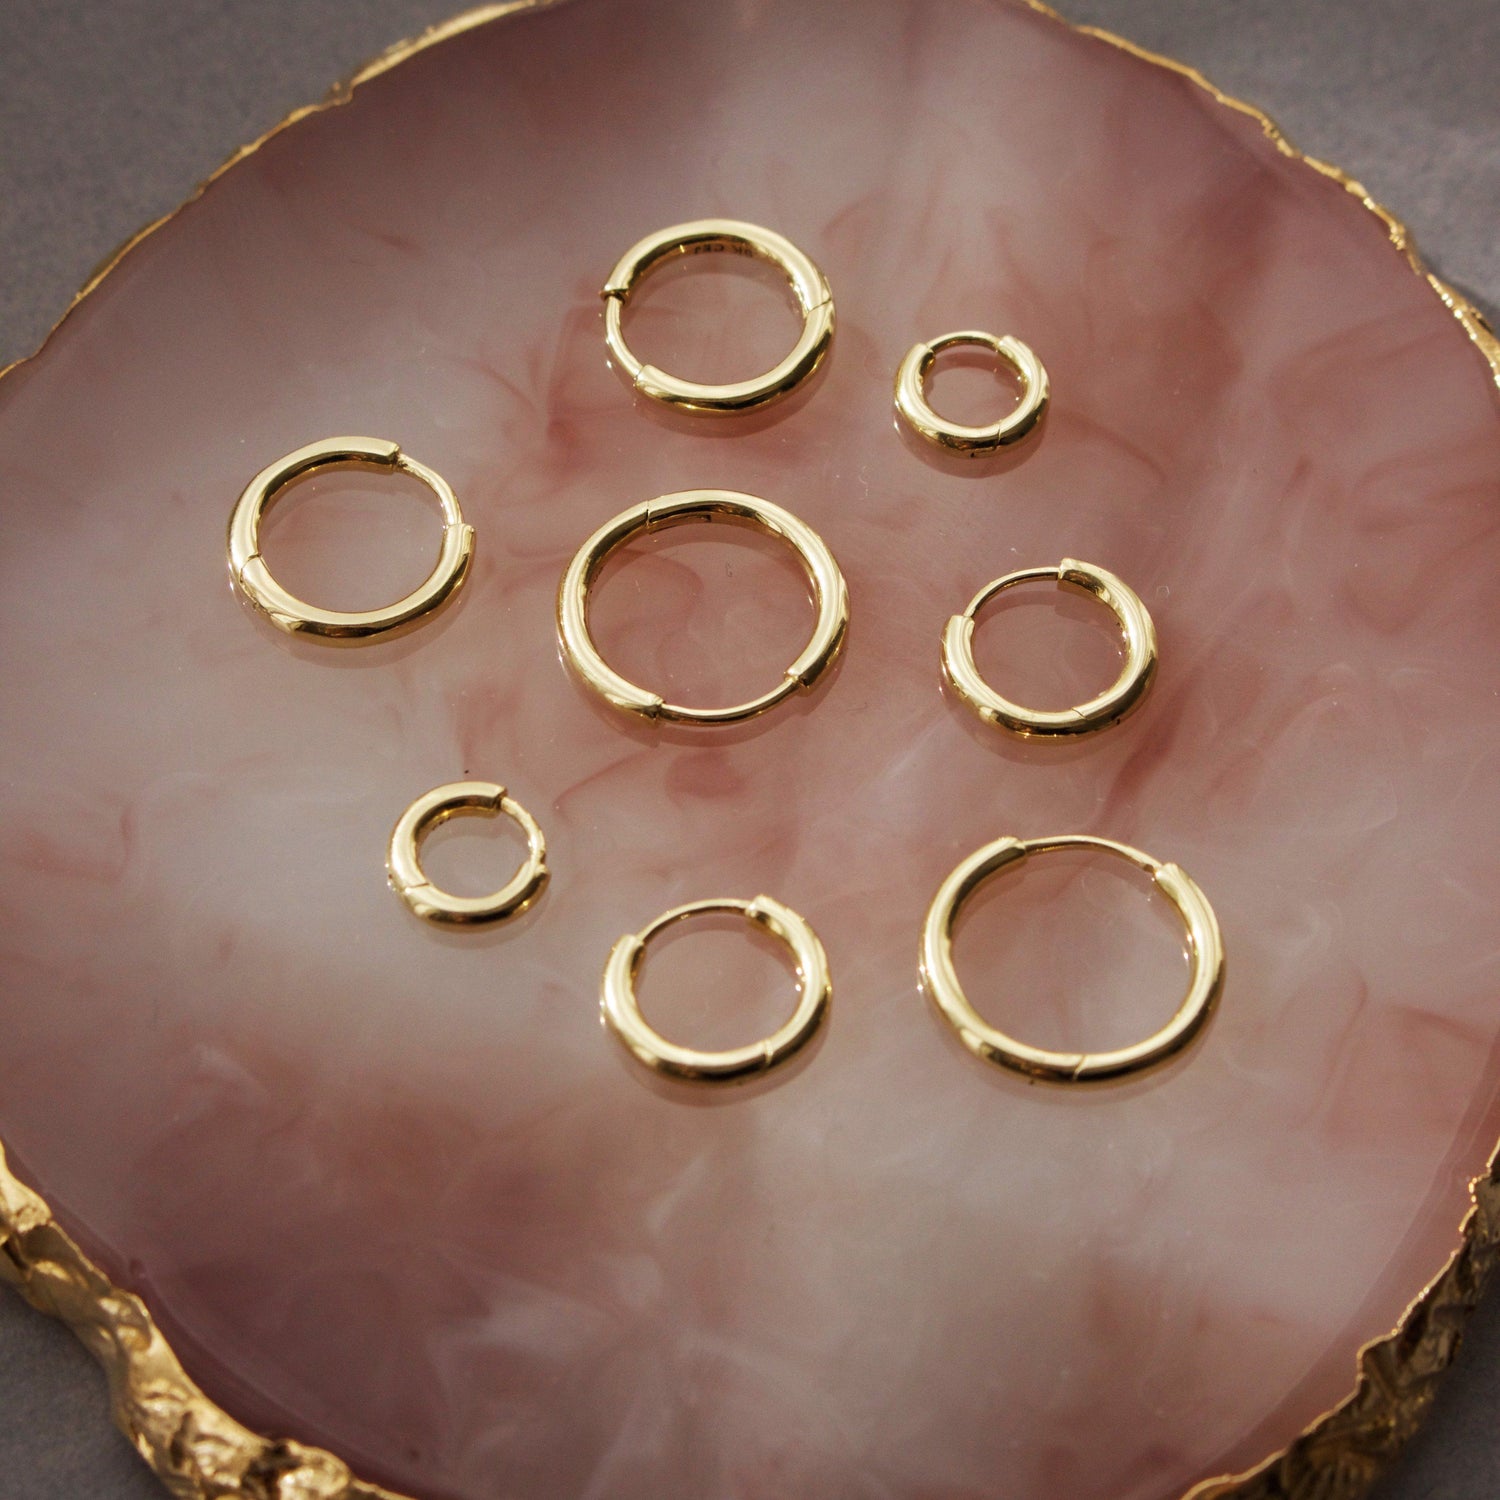 9k Solid Gold Small Hoop Earrings -SINGLE Earrings Pink City 